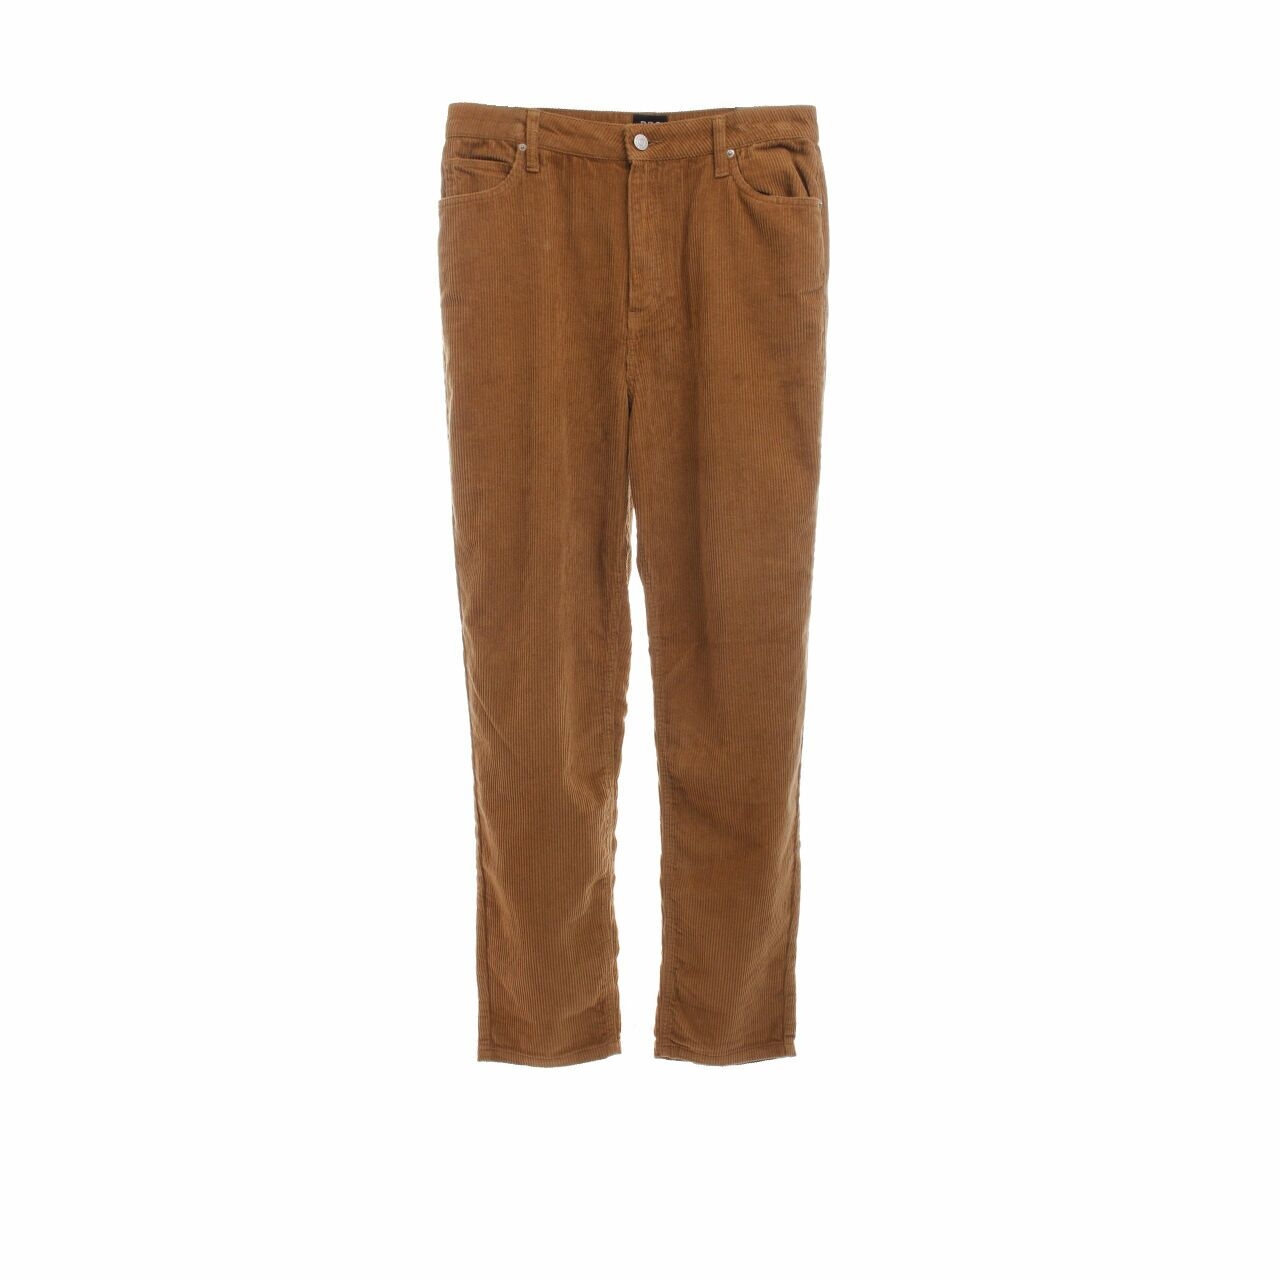 BDG Light Brown Corduroy Long Pants